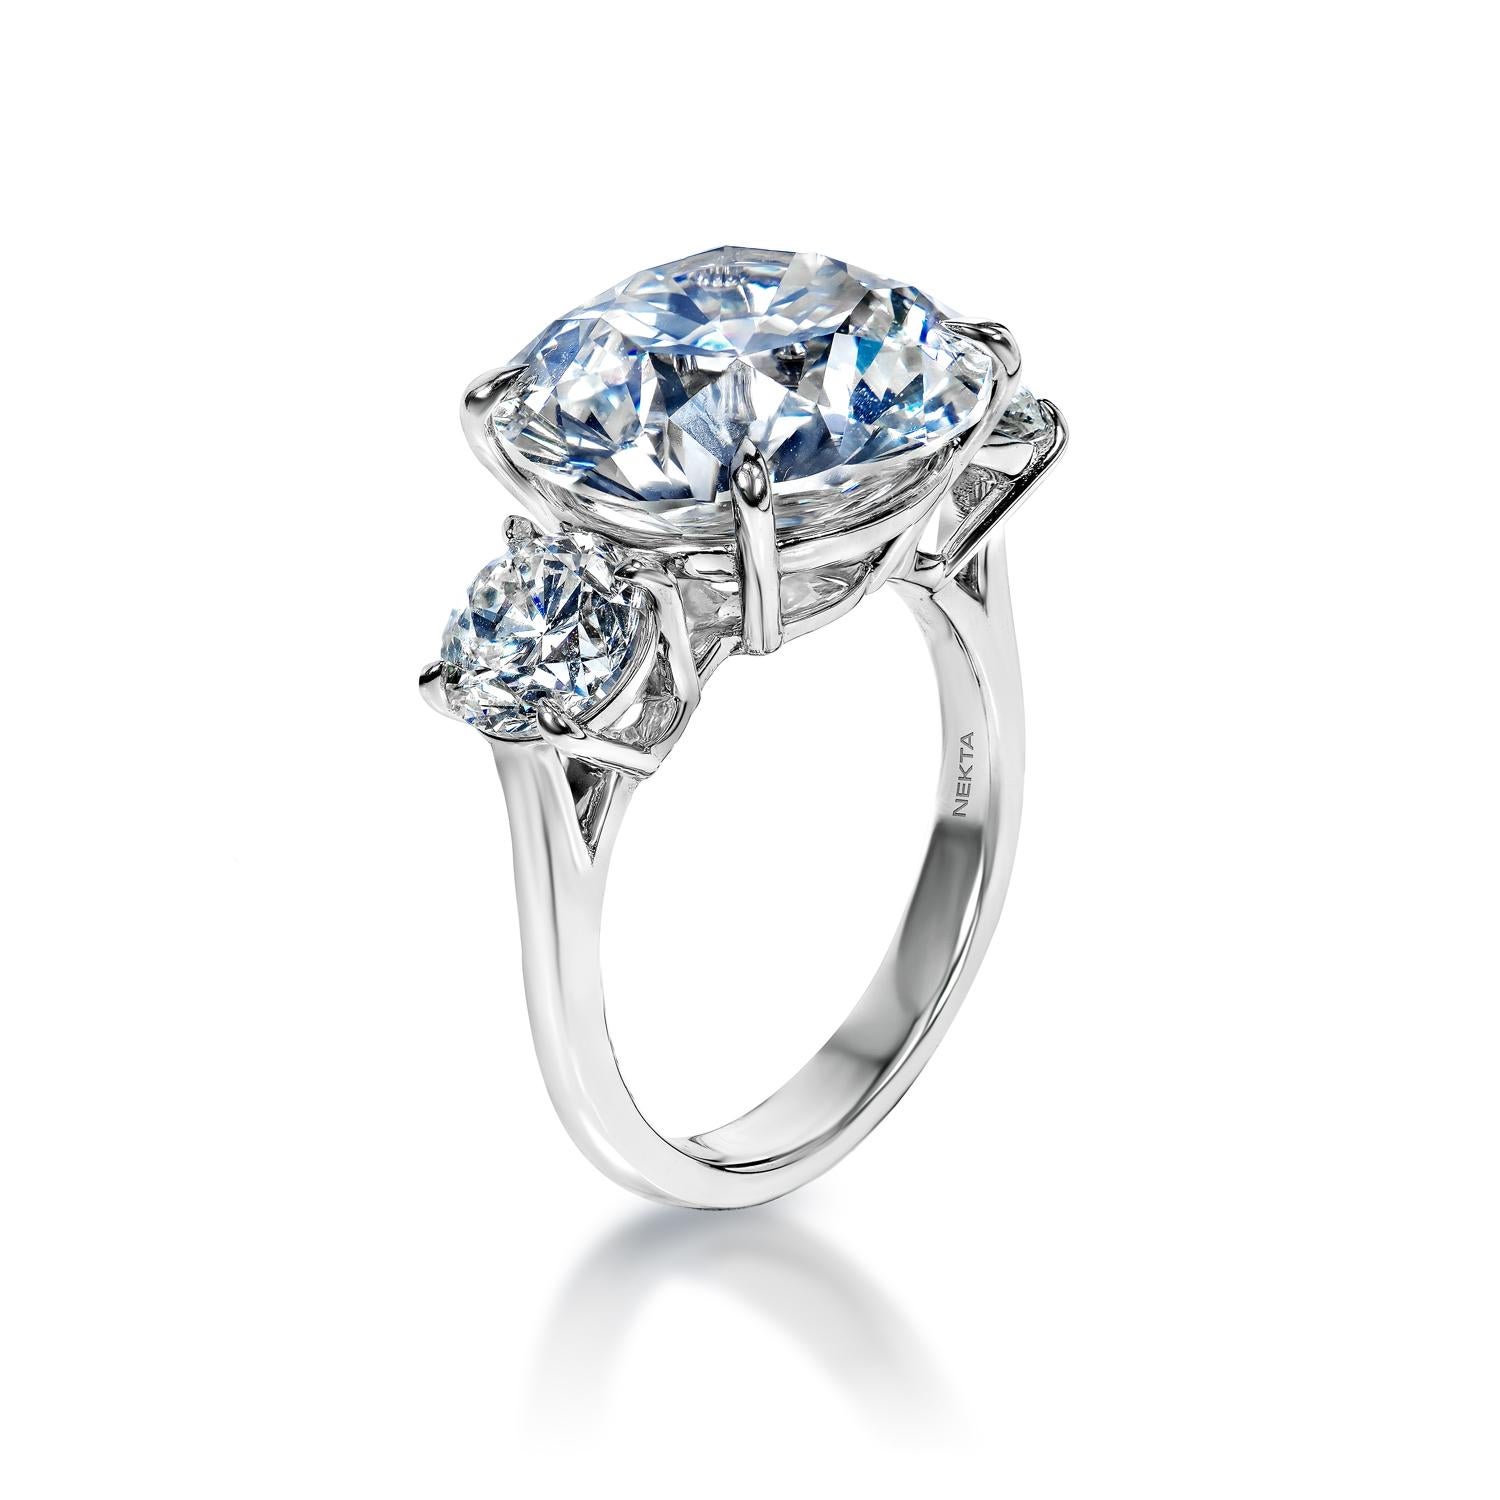 12 carat diamond ring